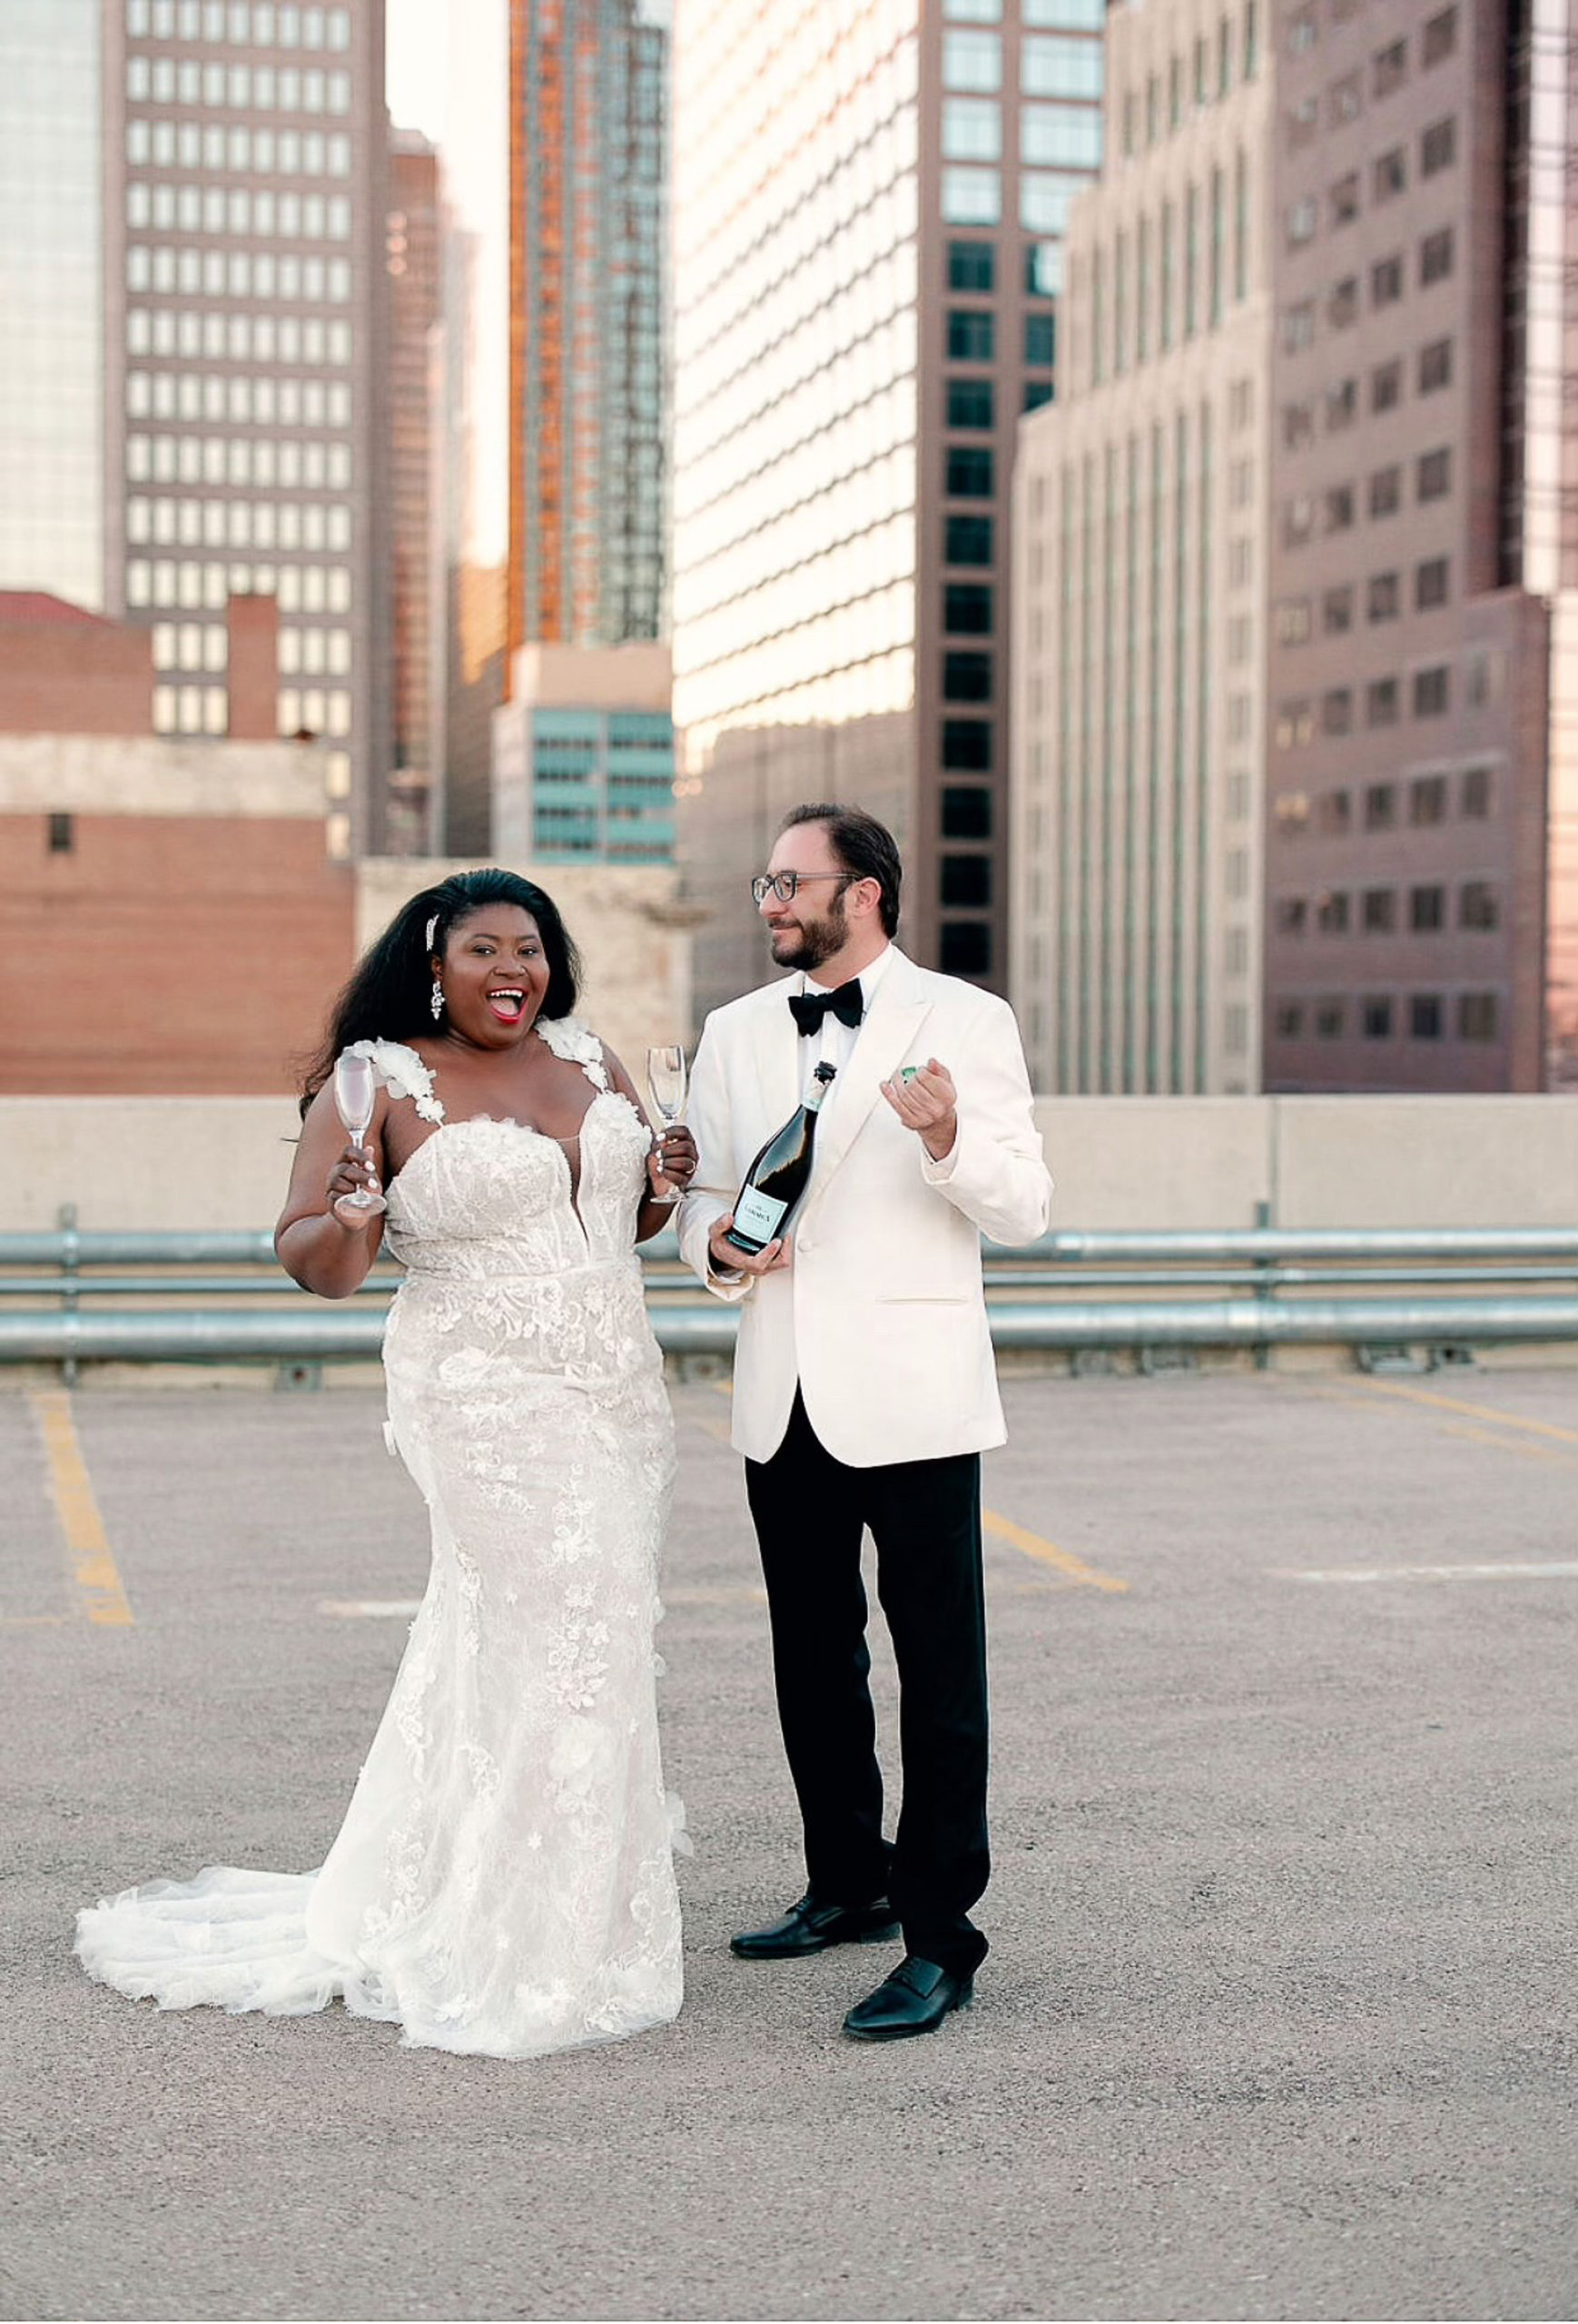 Glamazon Diaries wedding gown - David's Bridal spring 2021 campaign - plus size bride spring interracial couple